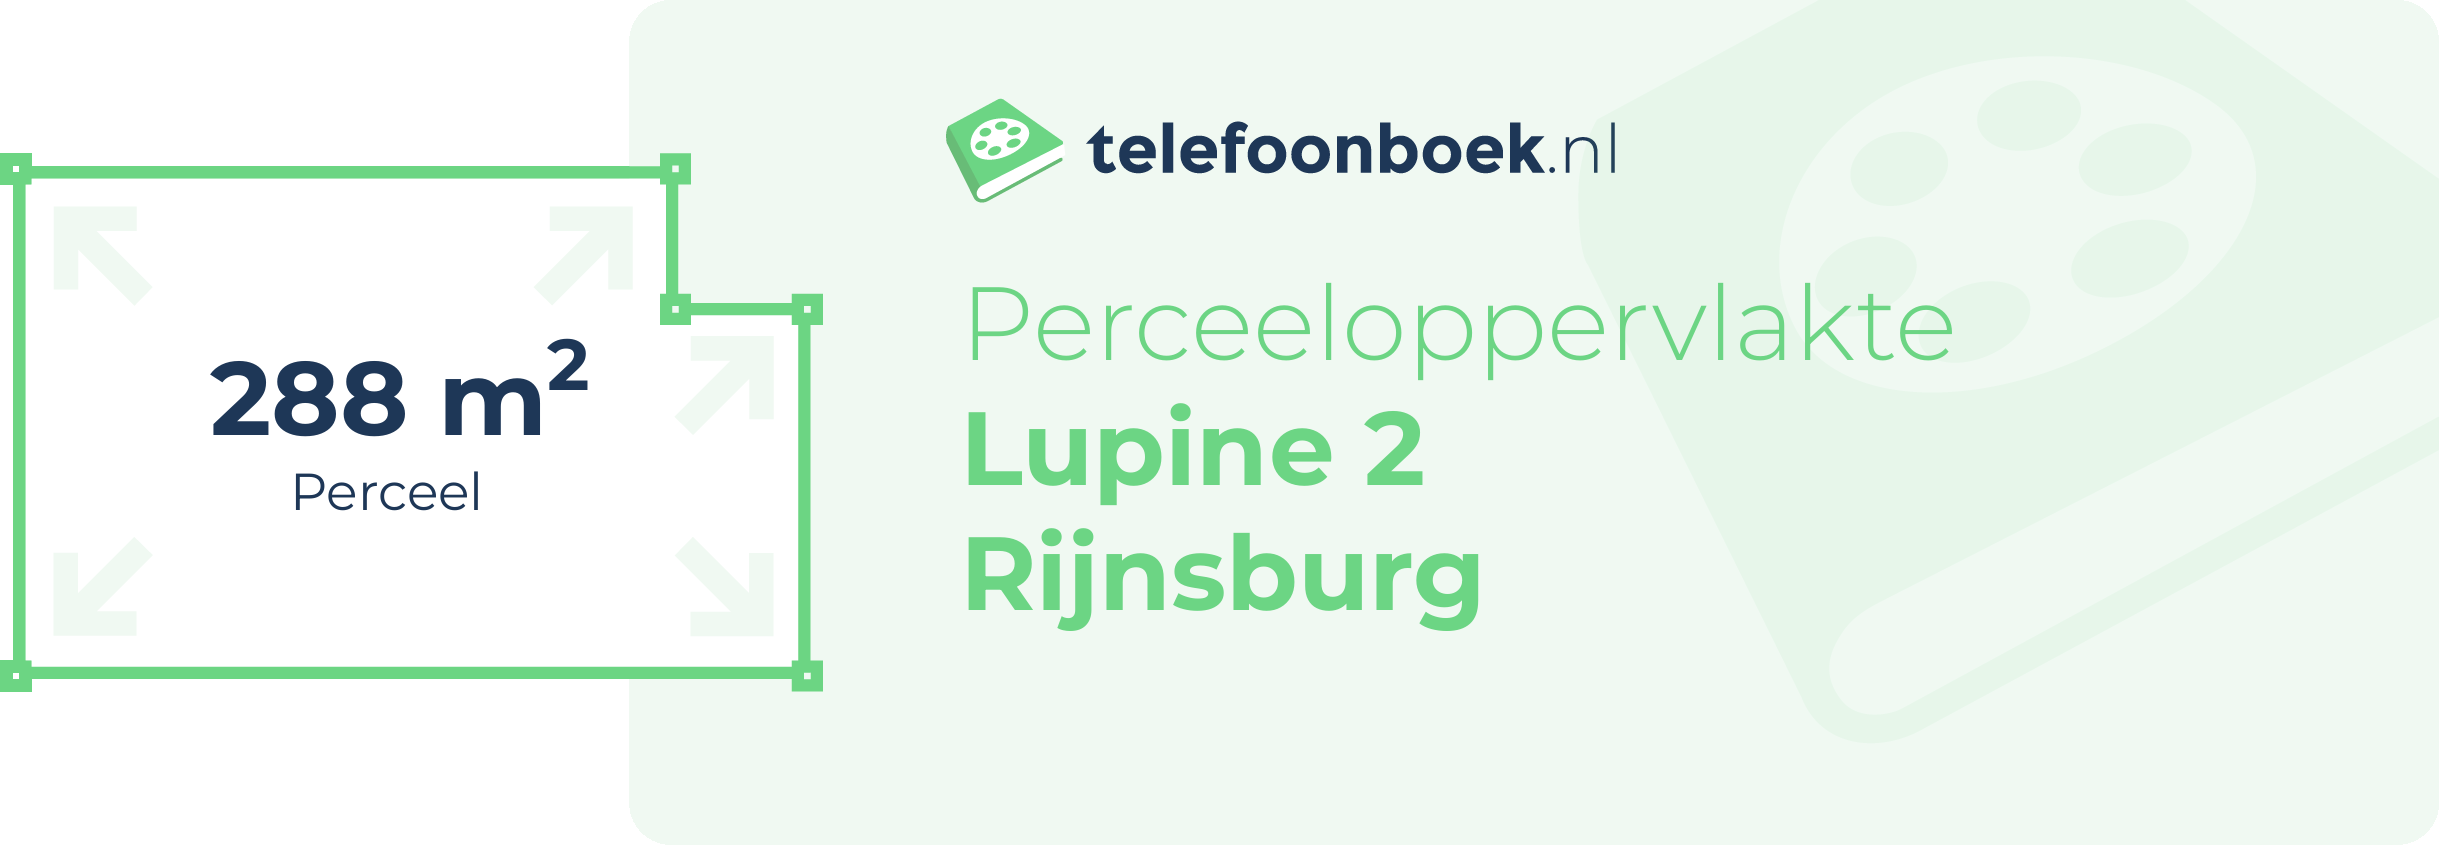 Perceeloppervlakte Lupine 2 Rijnsburg